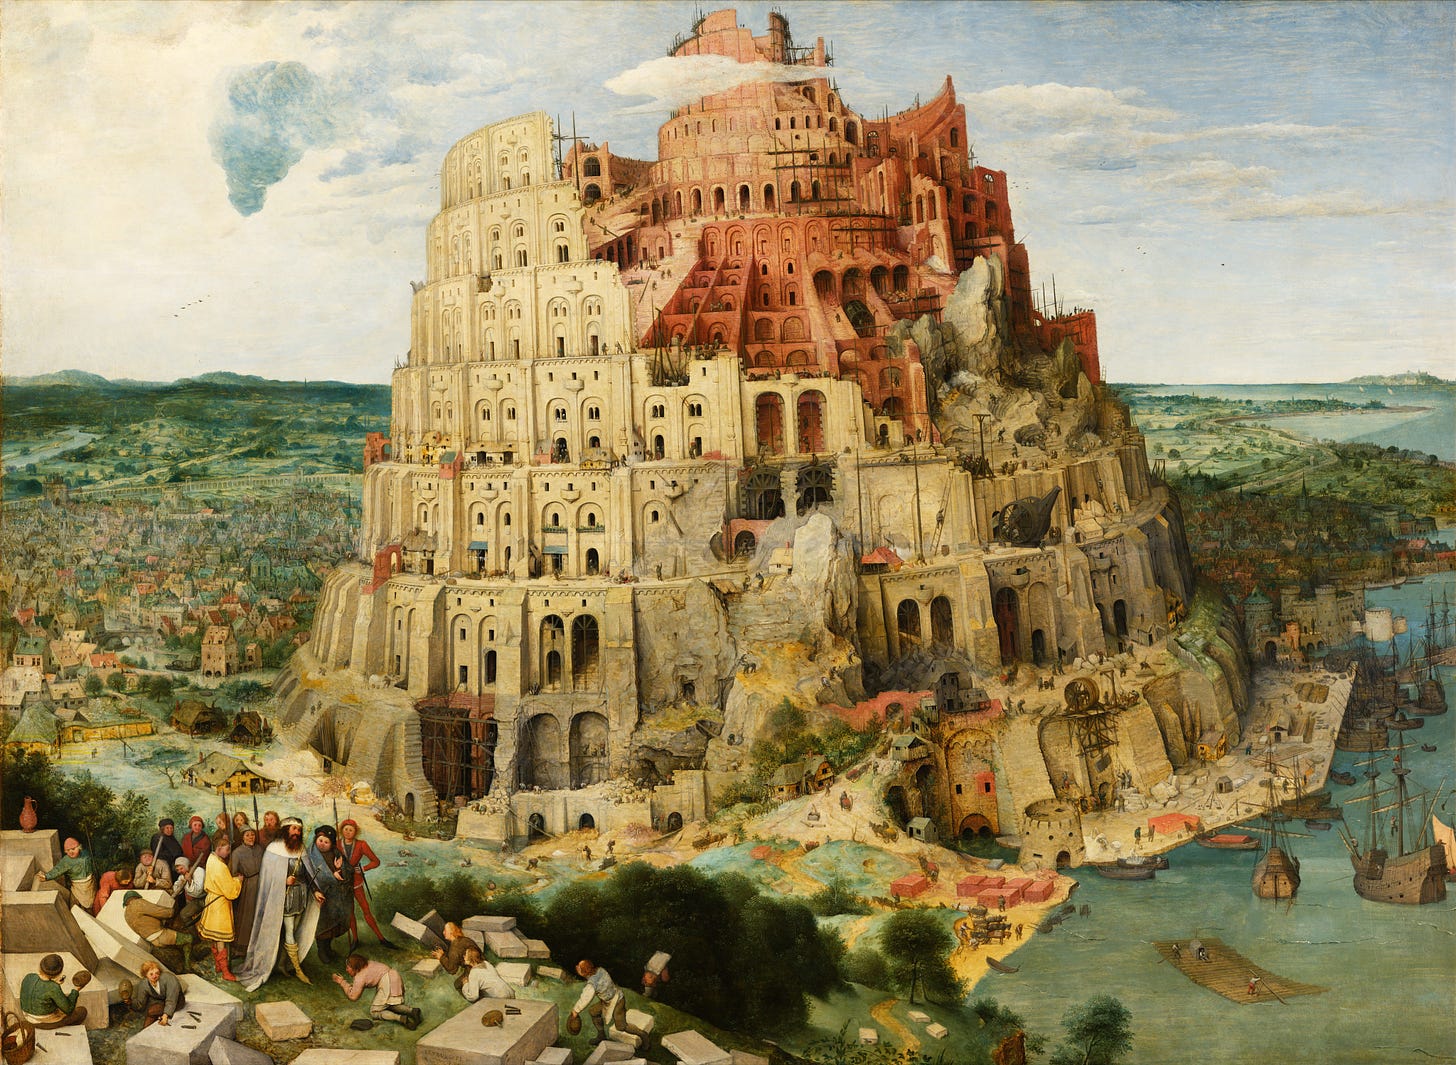 Tower of Babel (by Pieter Bruegel, 1563) by NixSeraph on DeviantArt